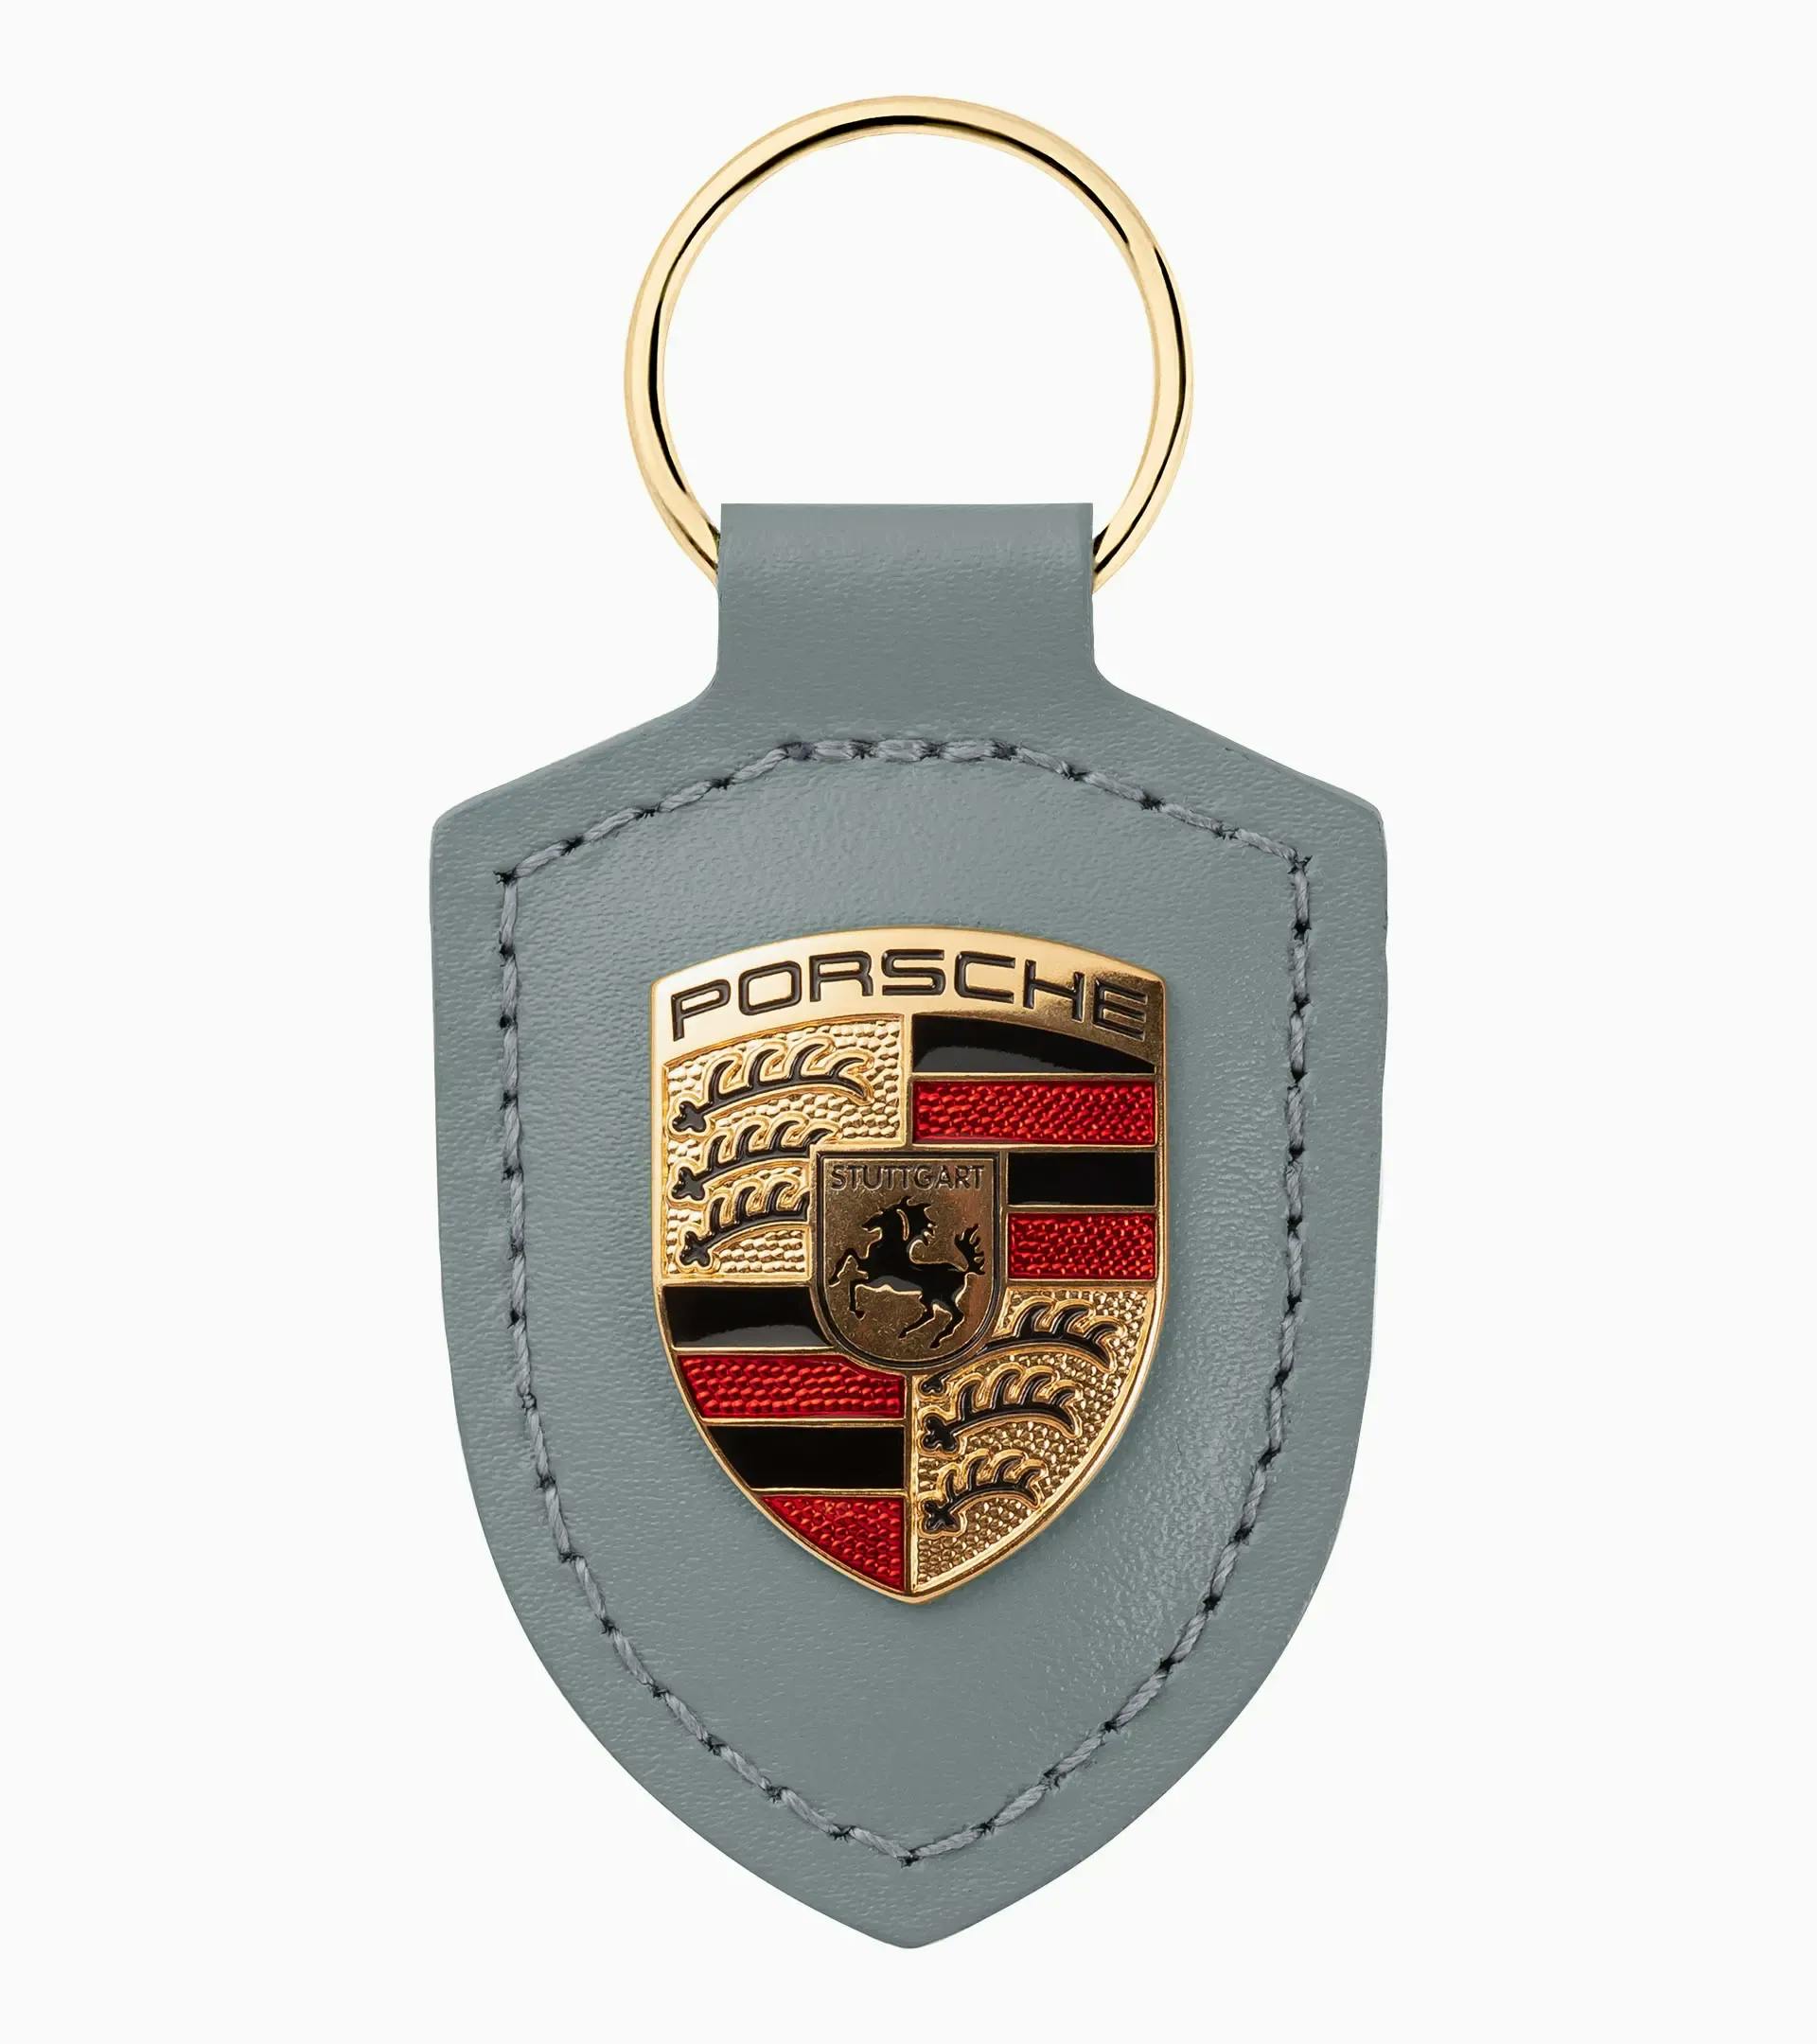 Crest key fob